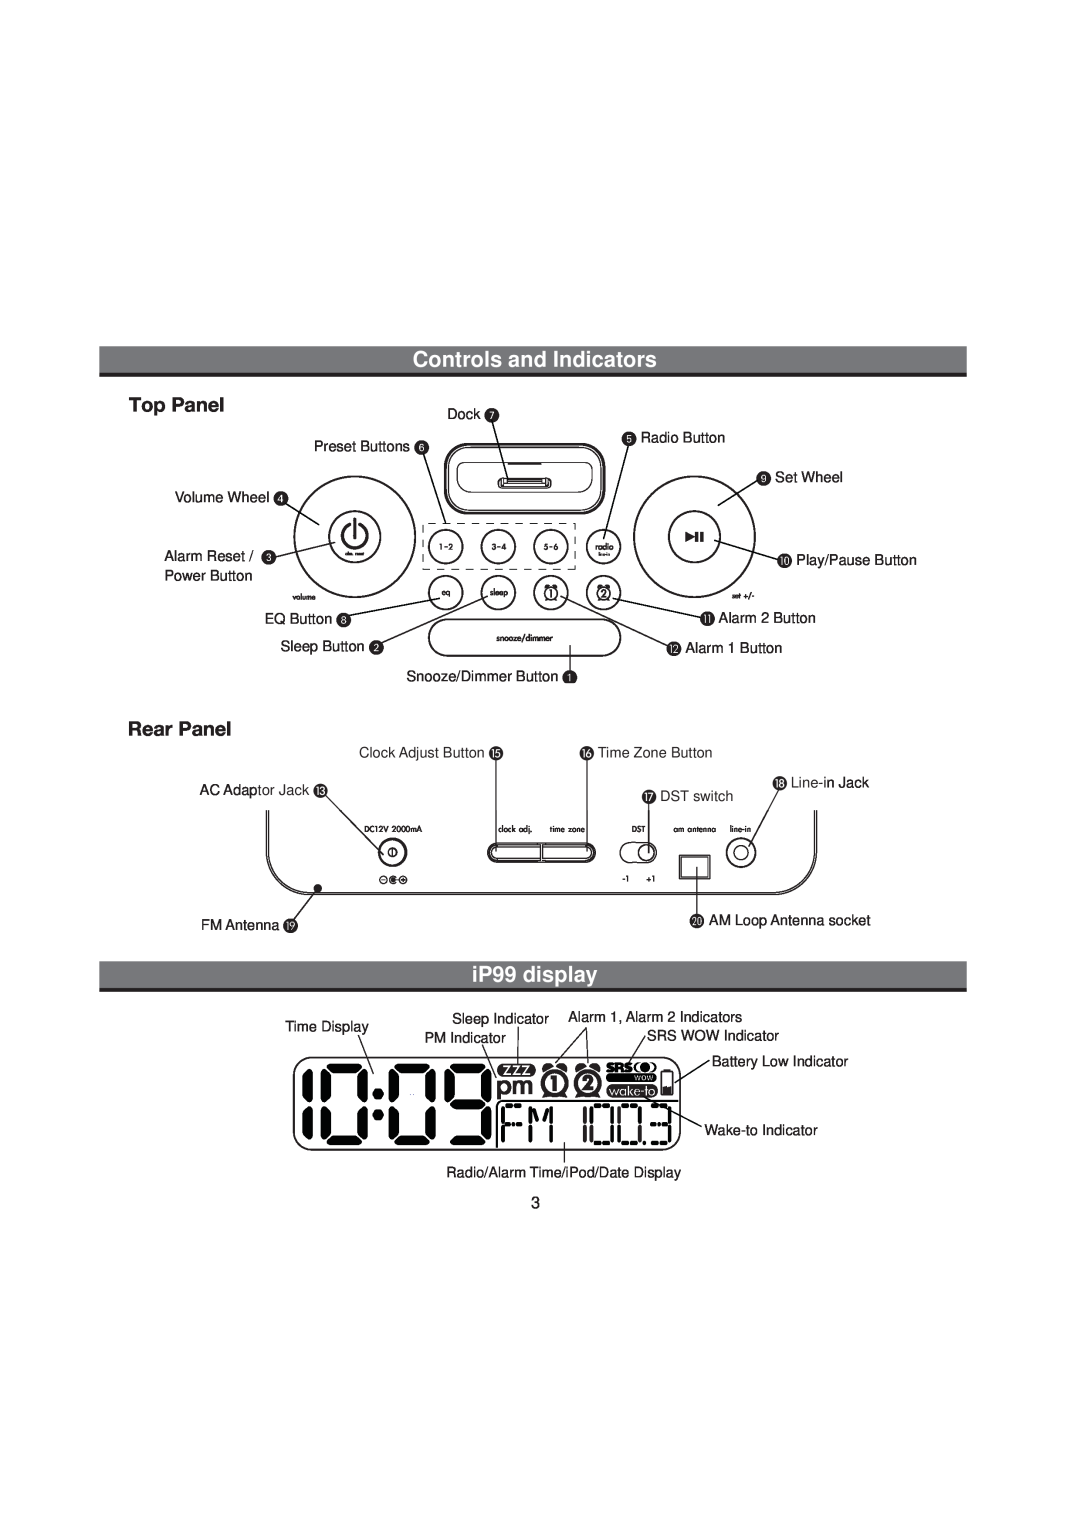 iHome manual Controls and Indicators, iP99 display, Top Panel, Rear Panel 